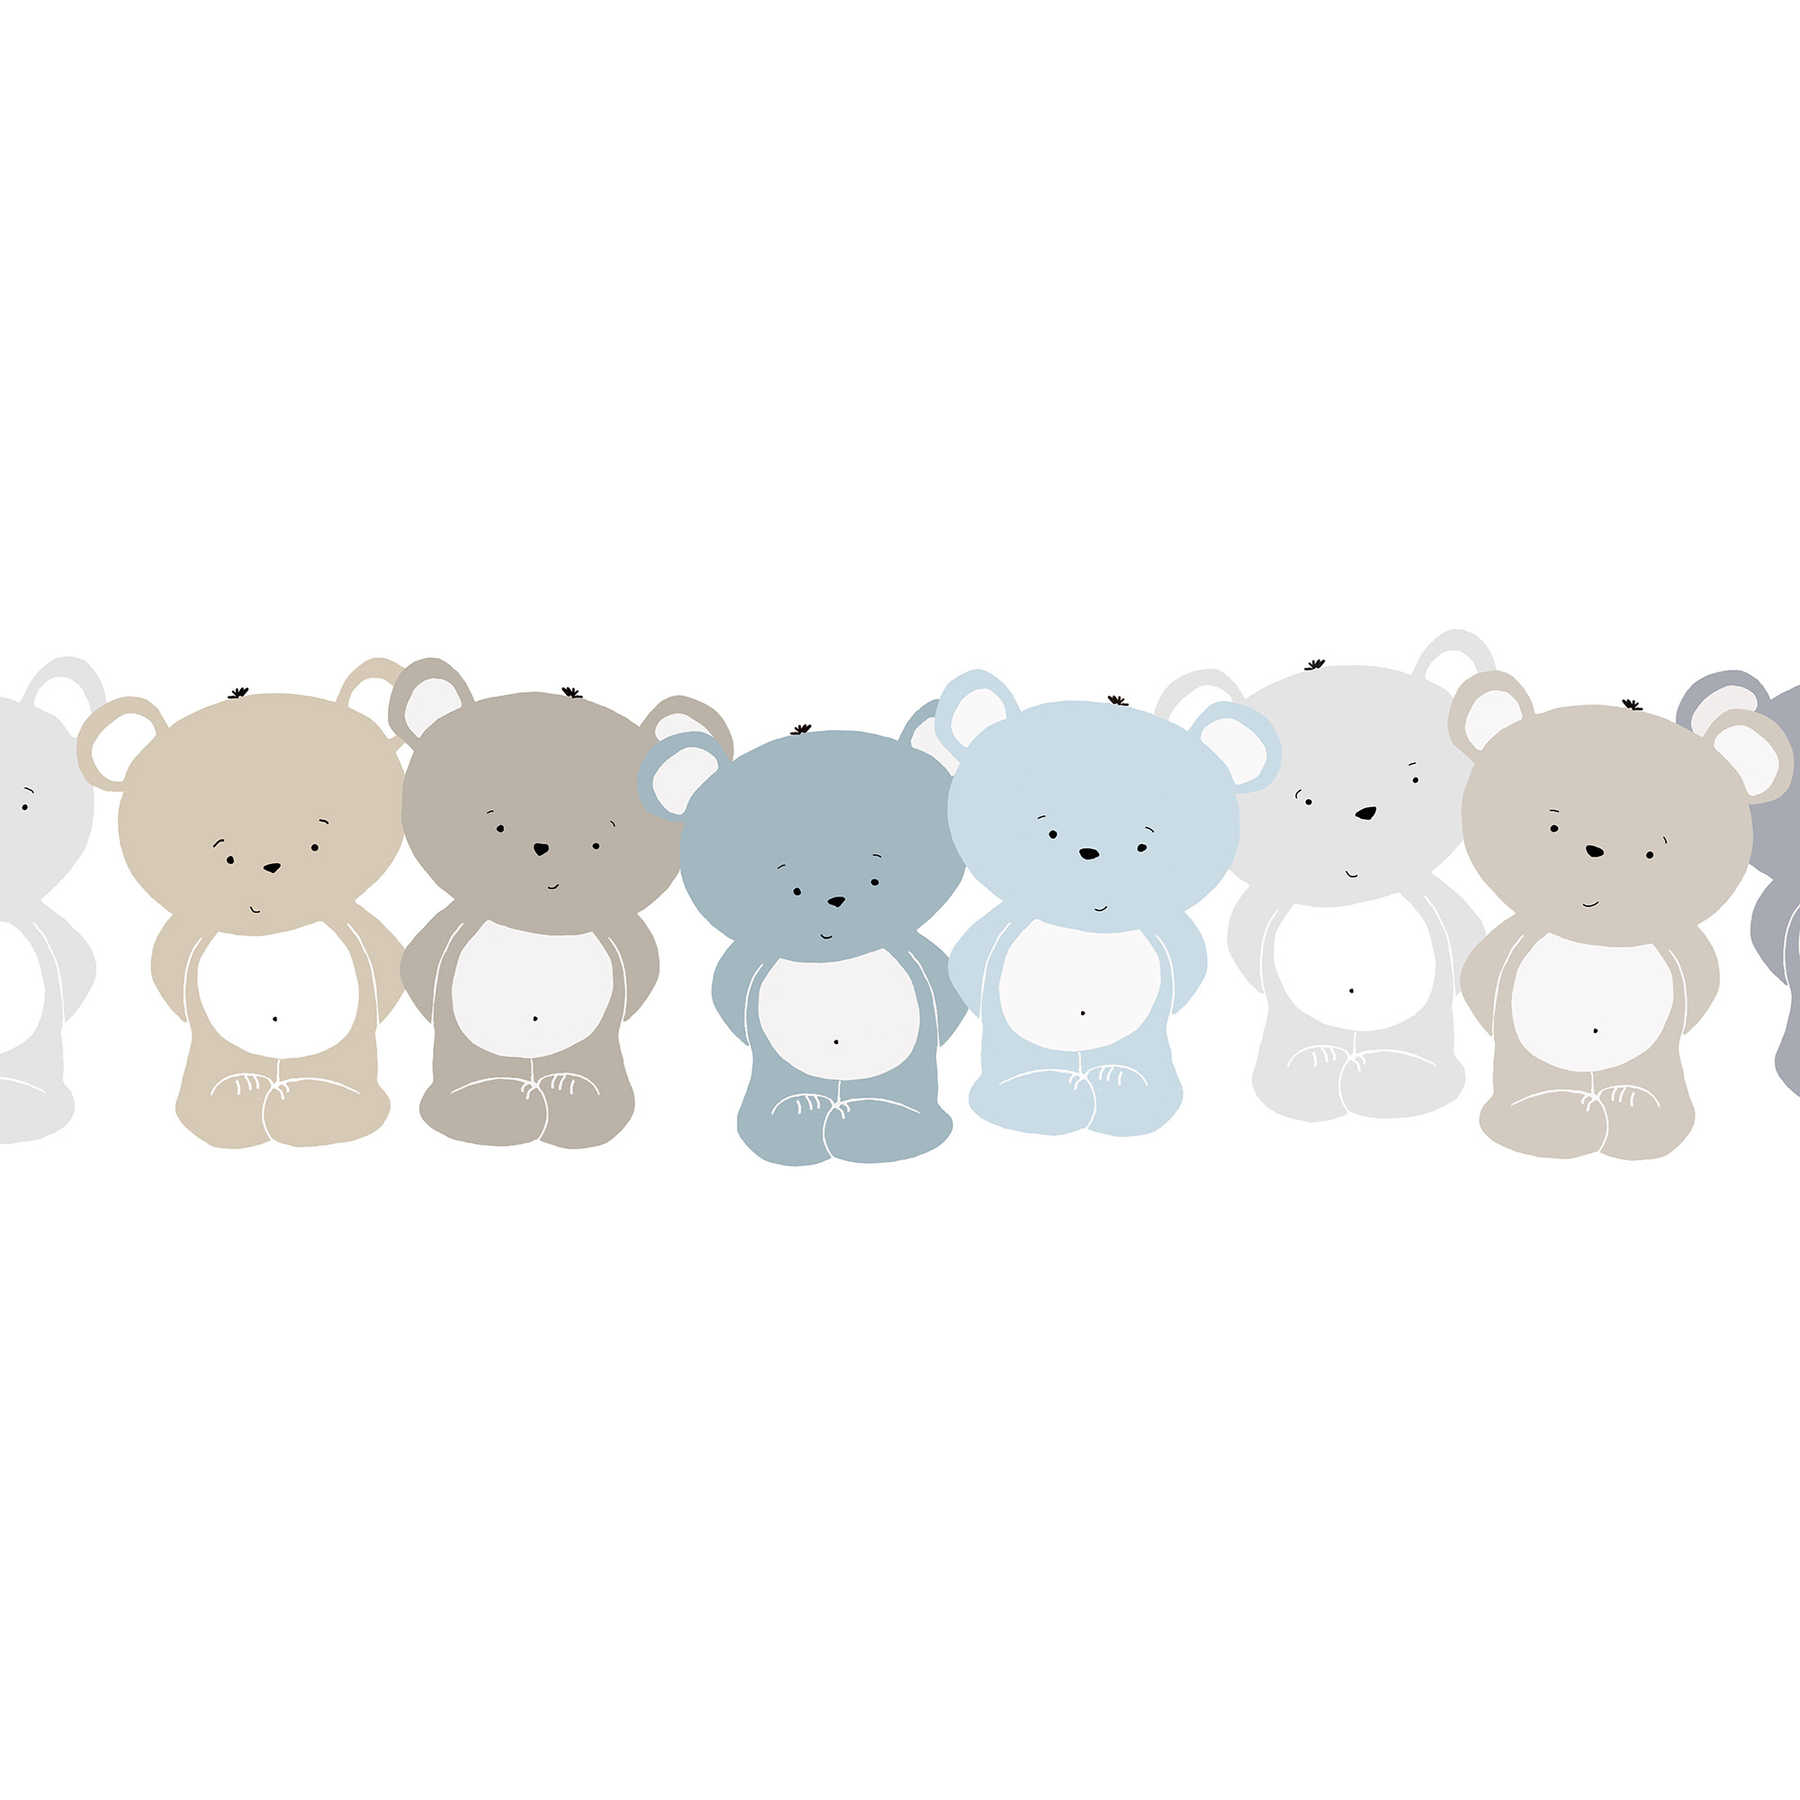         Nursery border "Cuddly bears" for little boys - Blue, Brown, Green
    